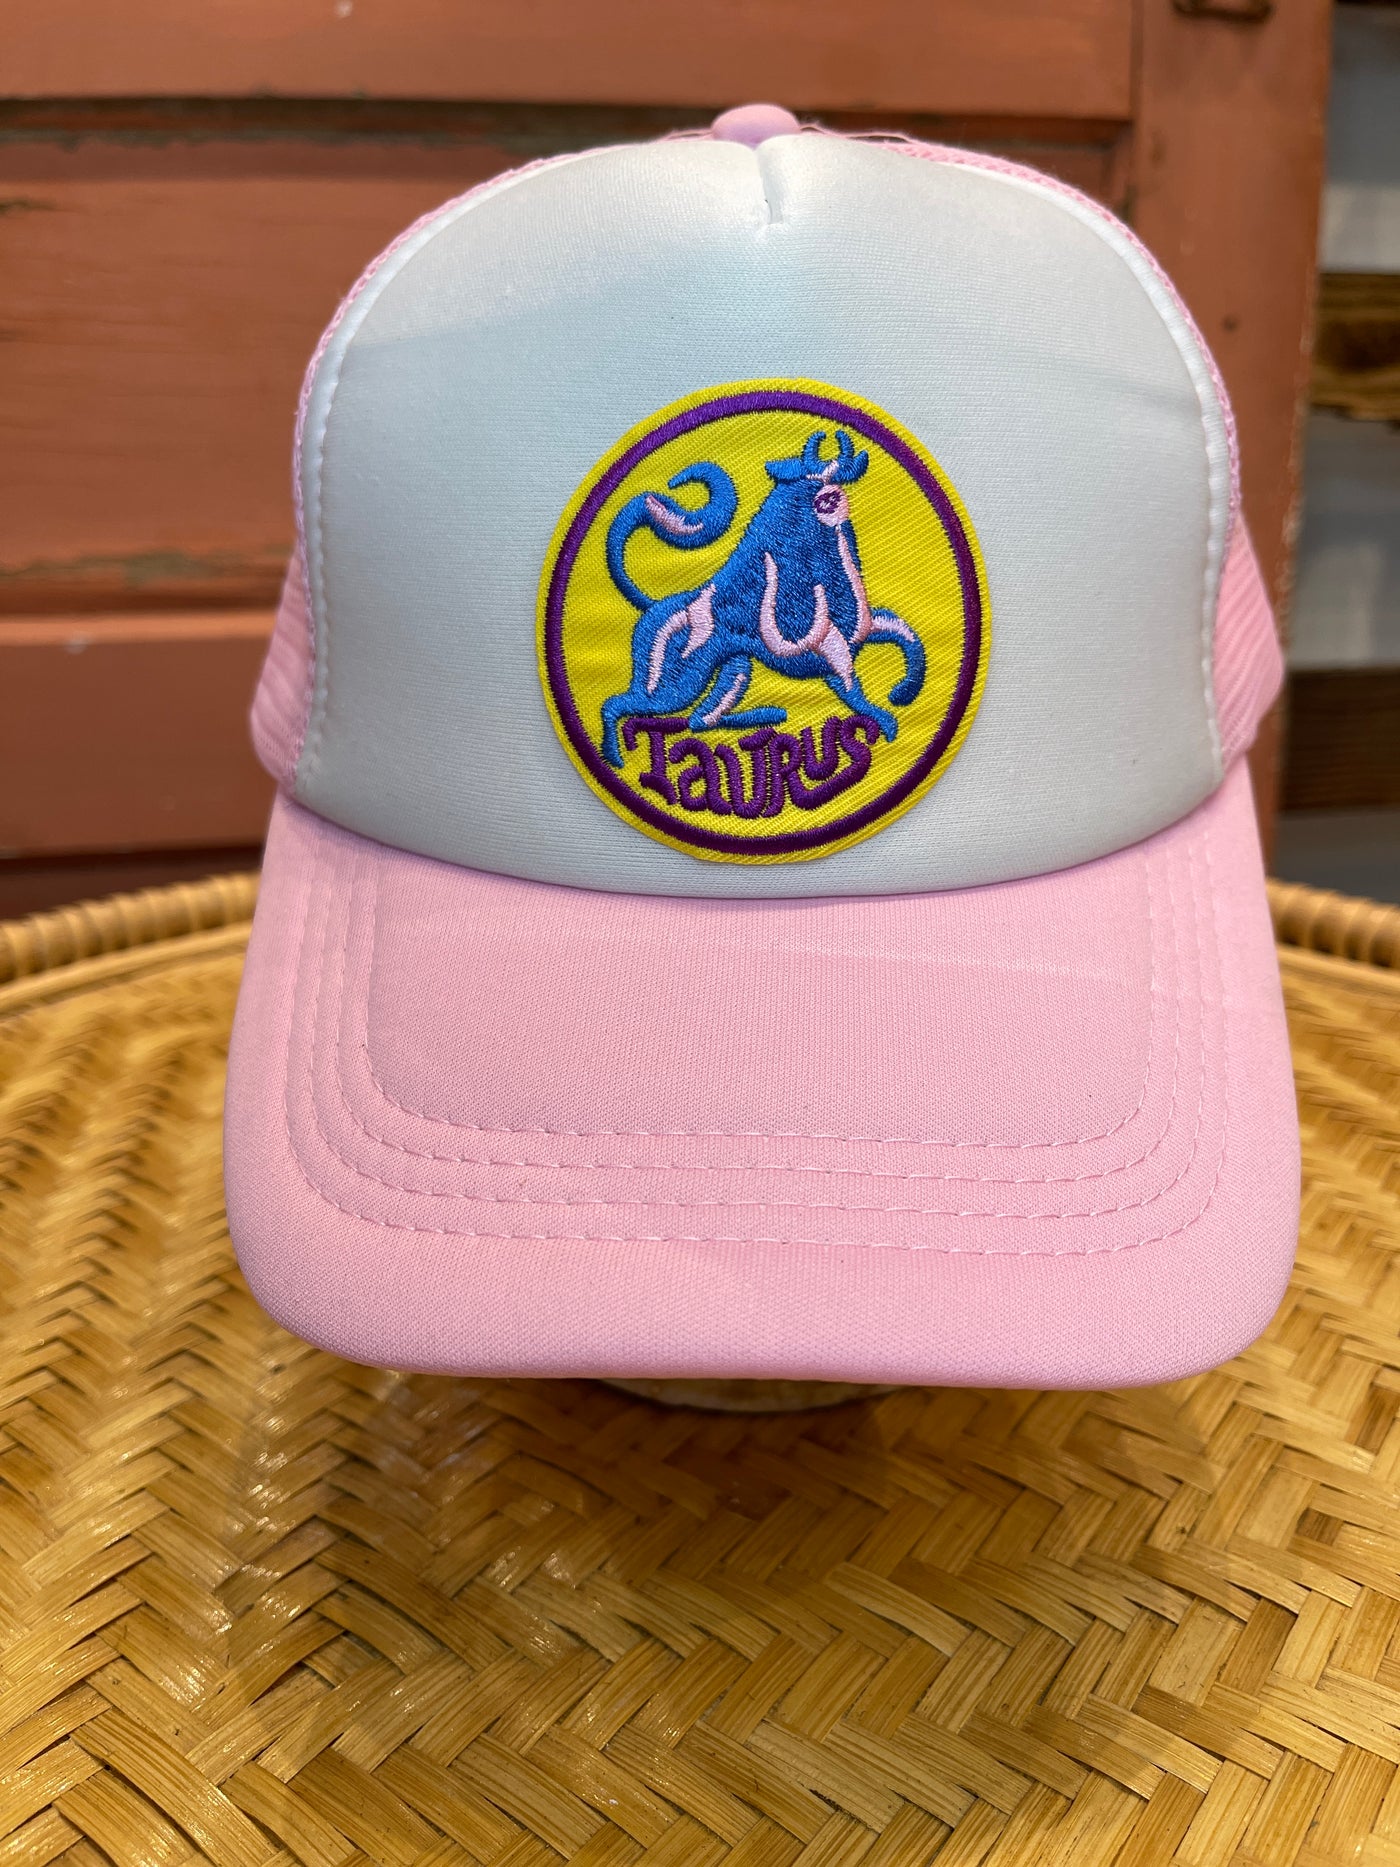 Angie's Custom Trucker Hats